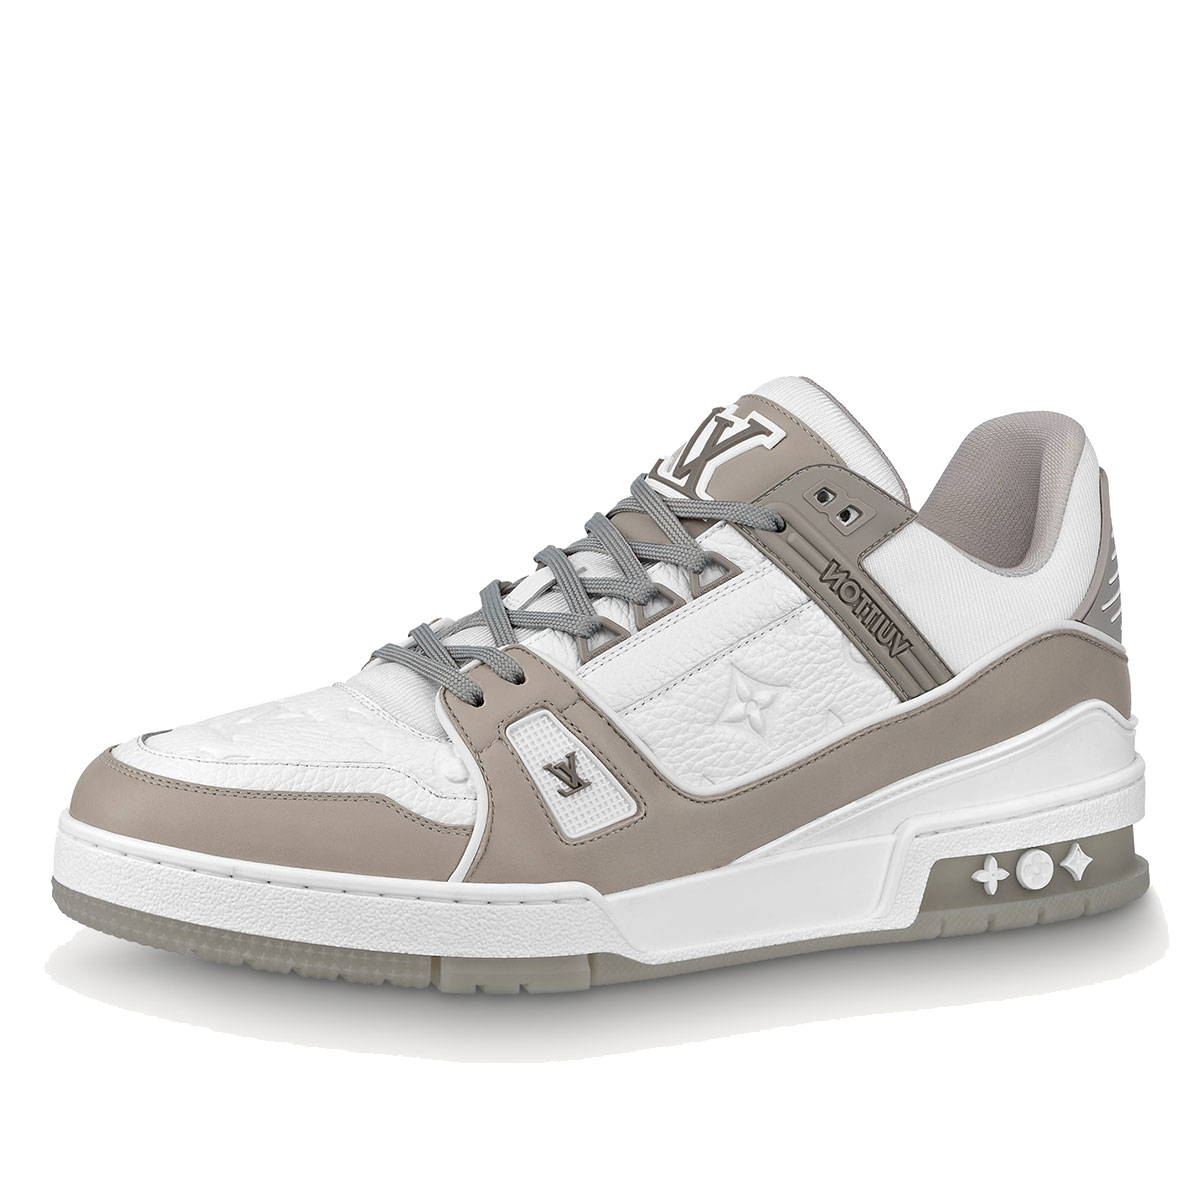 Louis Vuitton LV Trainer Sneaker in Grey